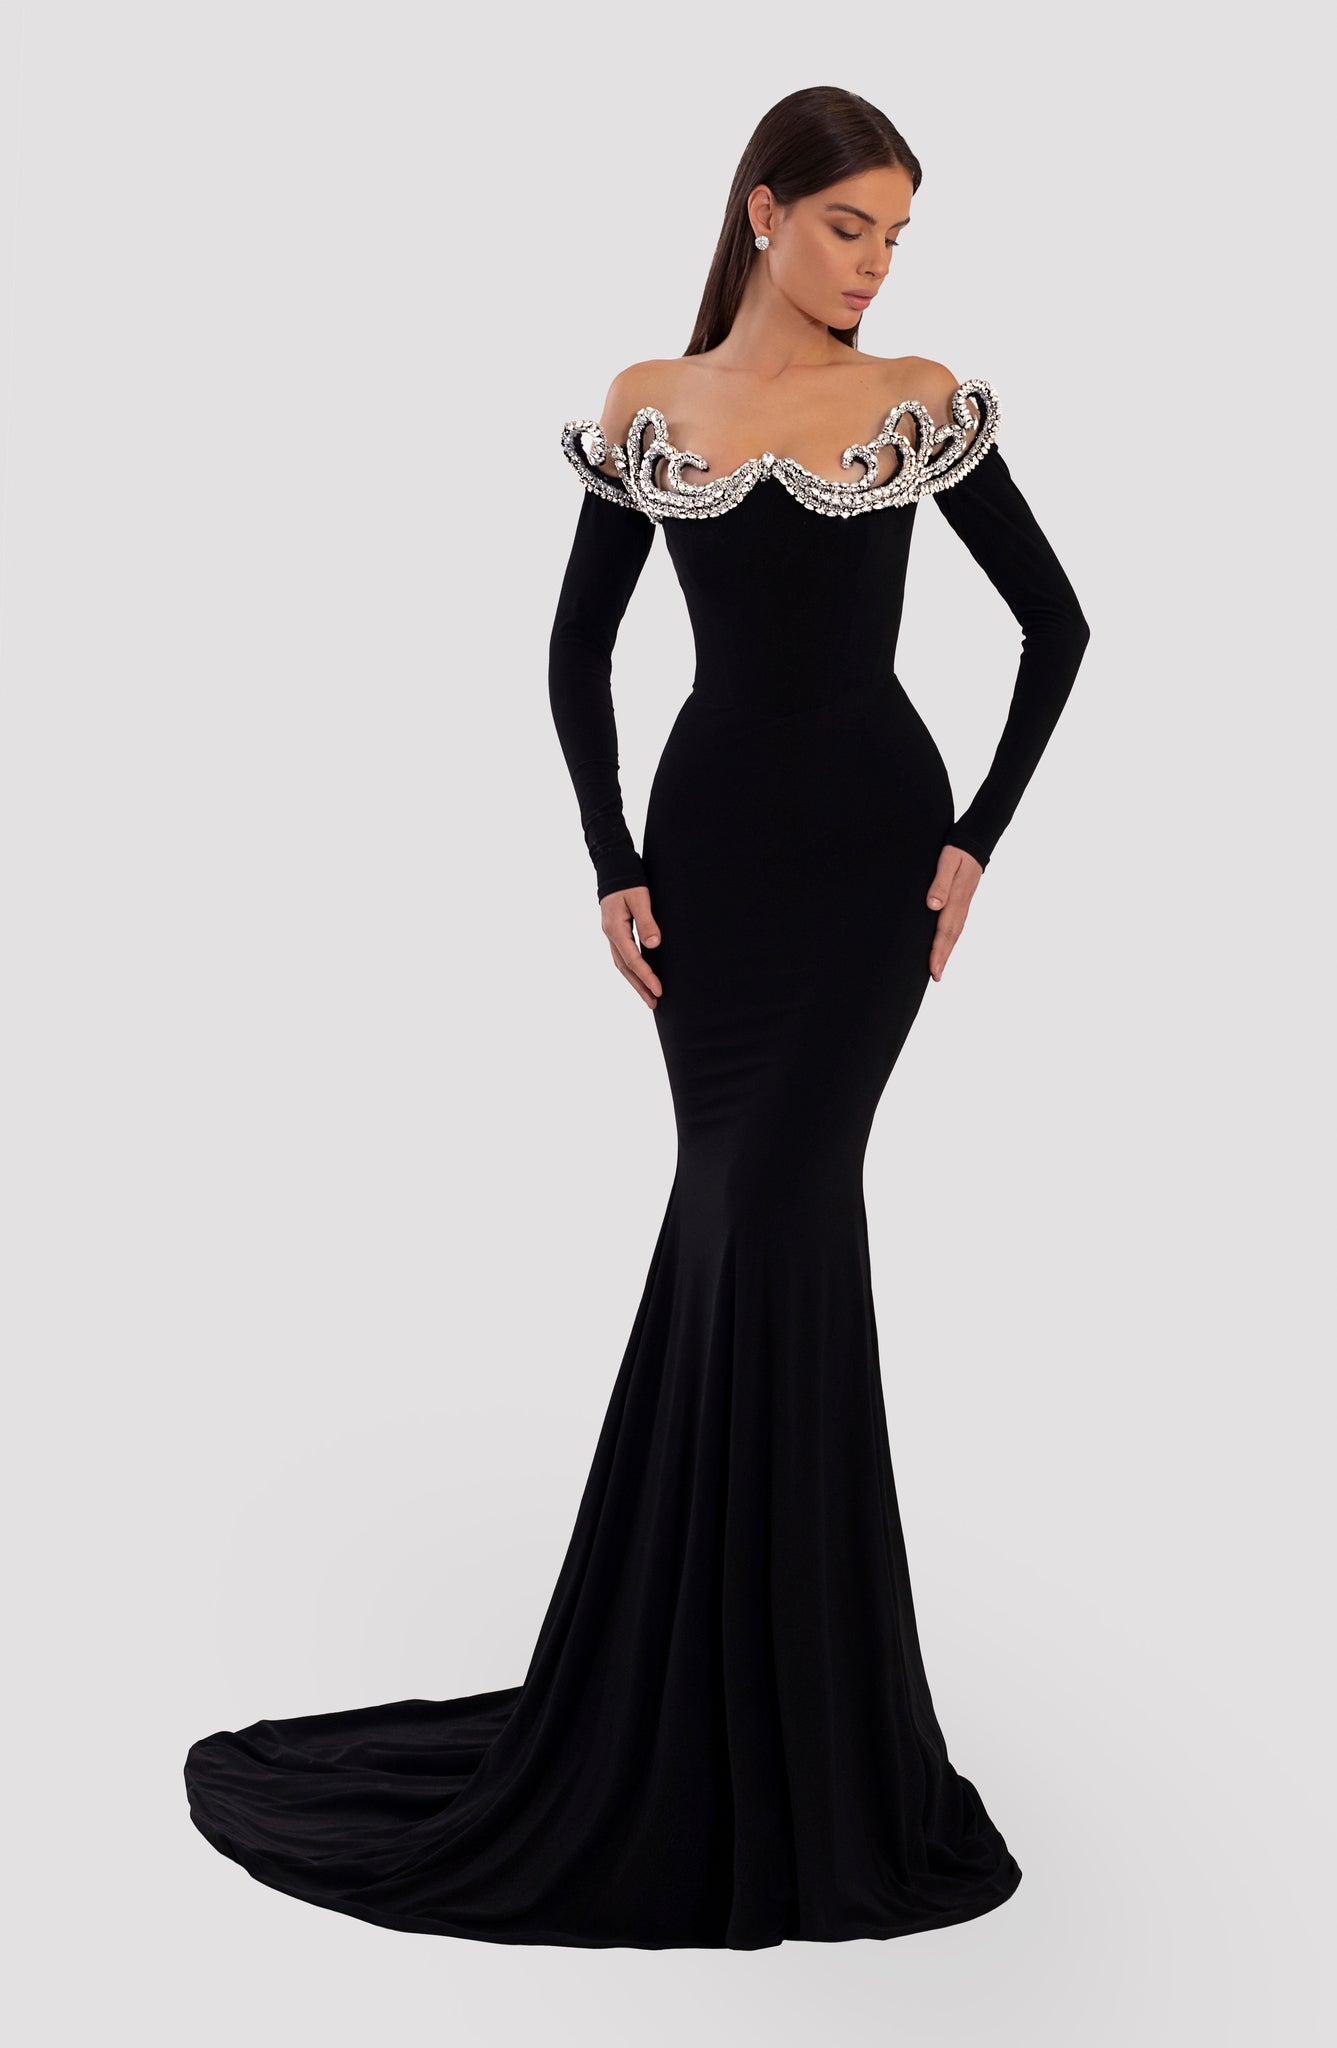 Modest Black Long Tulle Formal Dress with Long Lantern Sleeves | Modest  formal dresses, Prom dresses modest, Prom dresses long with sleeves